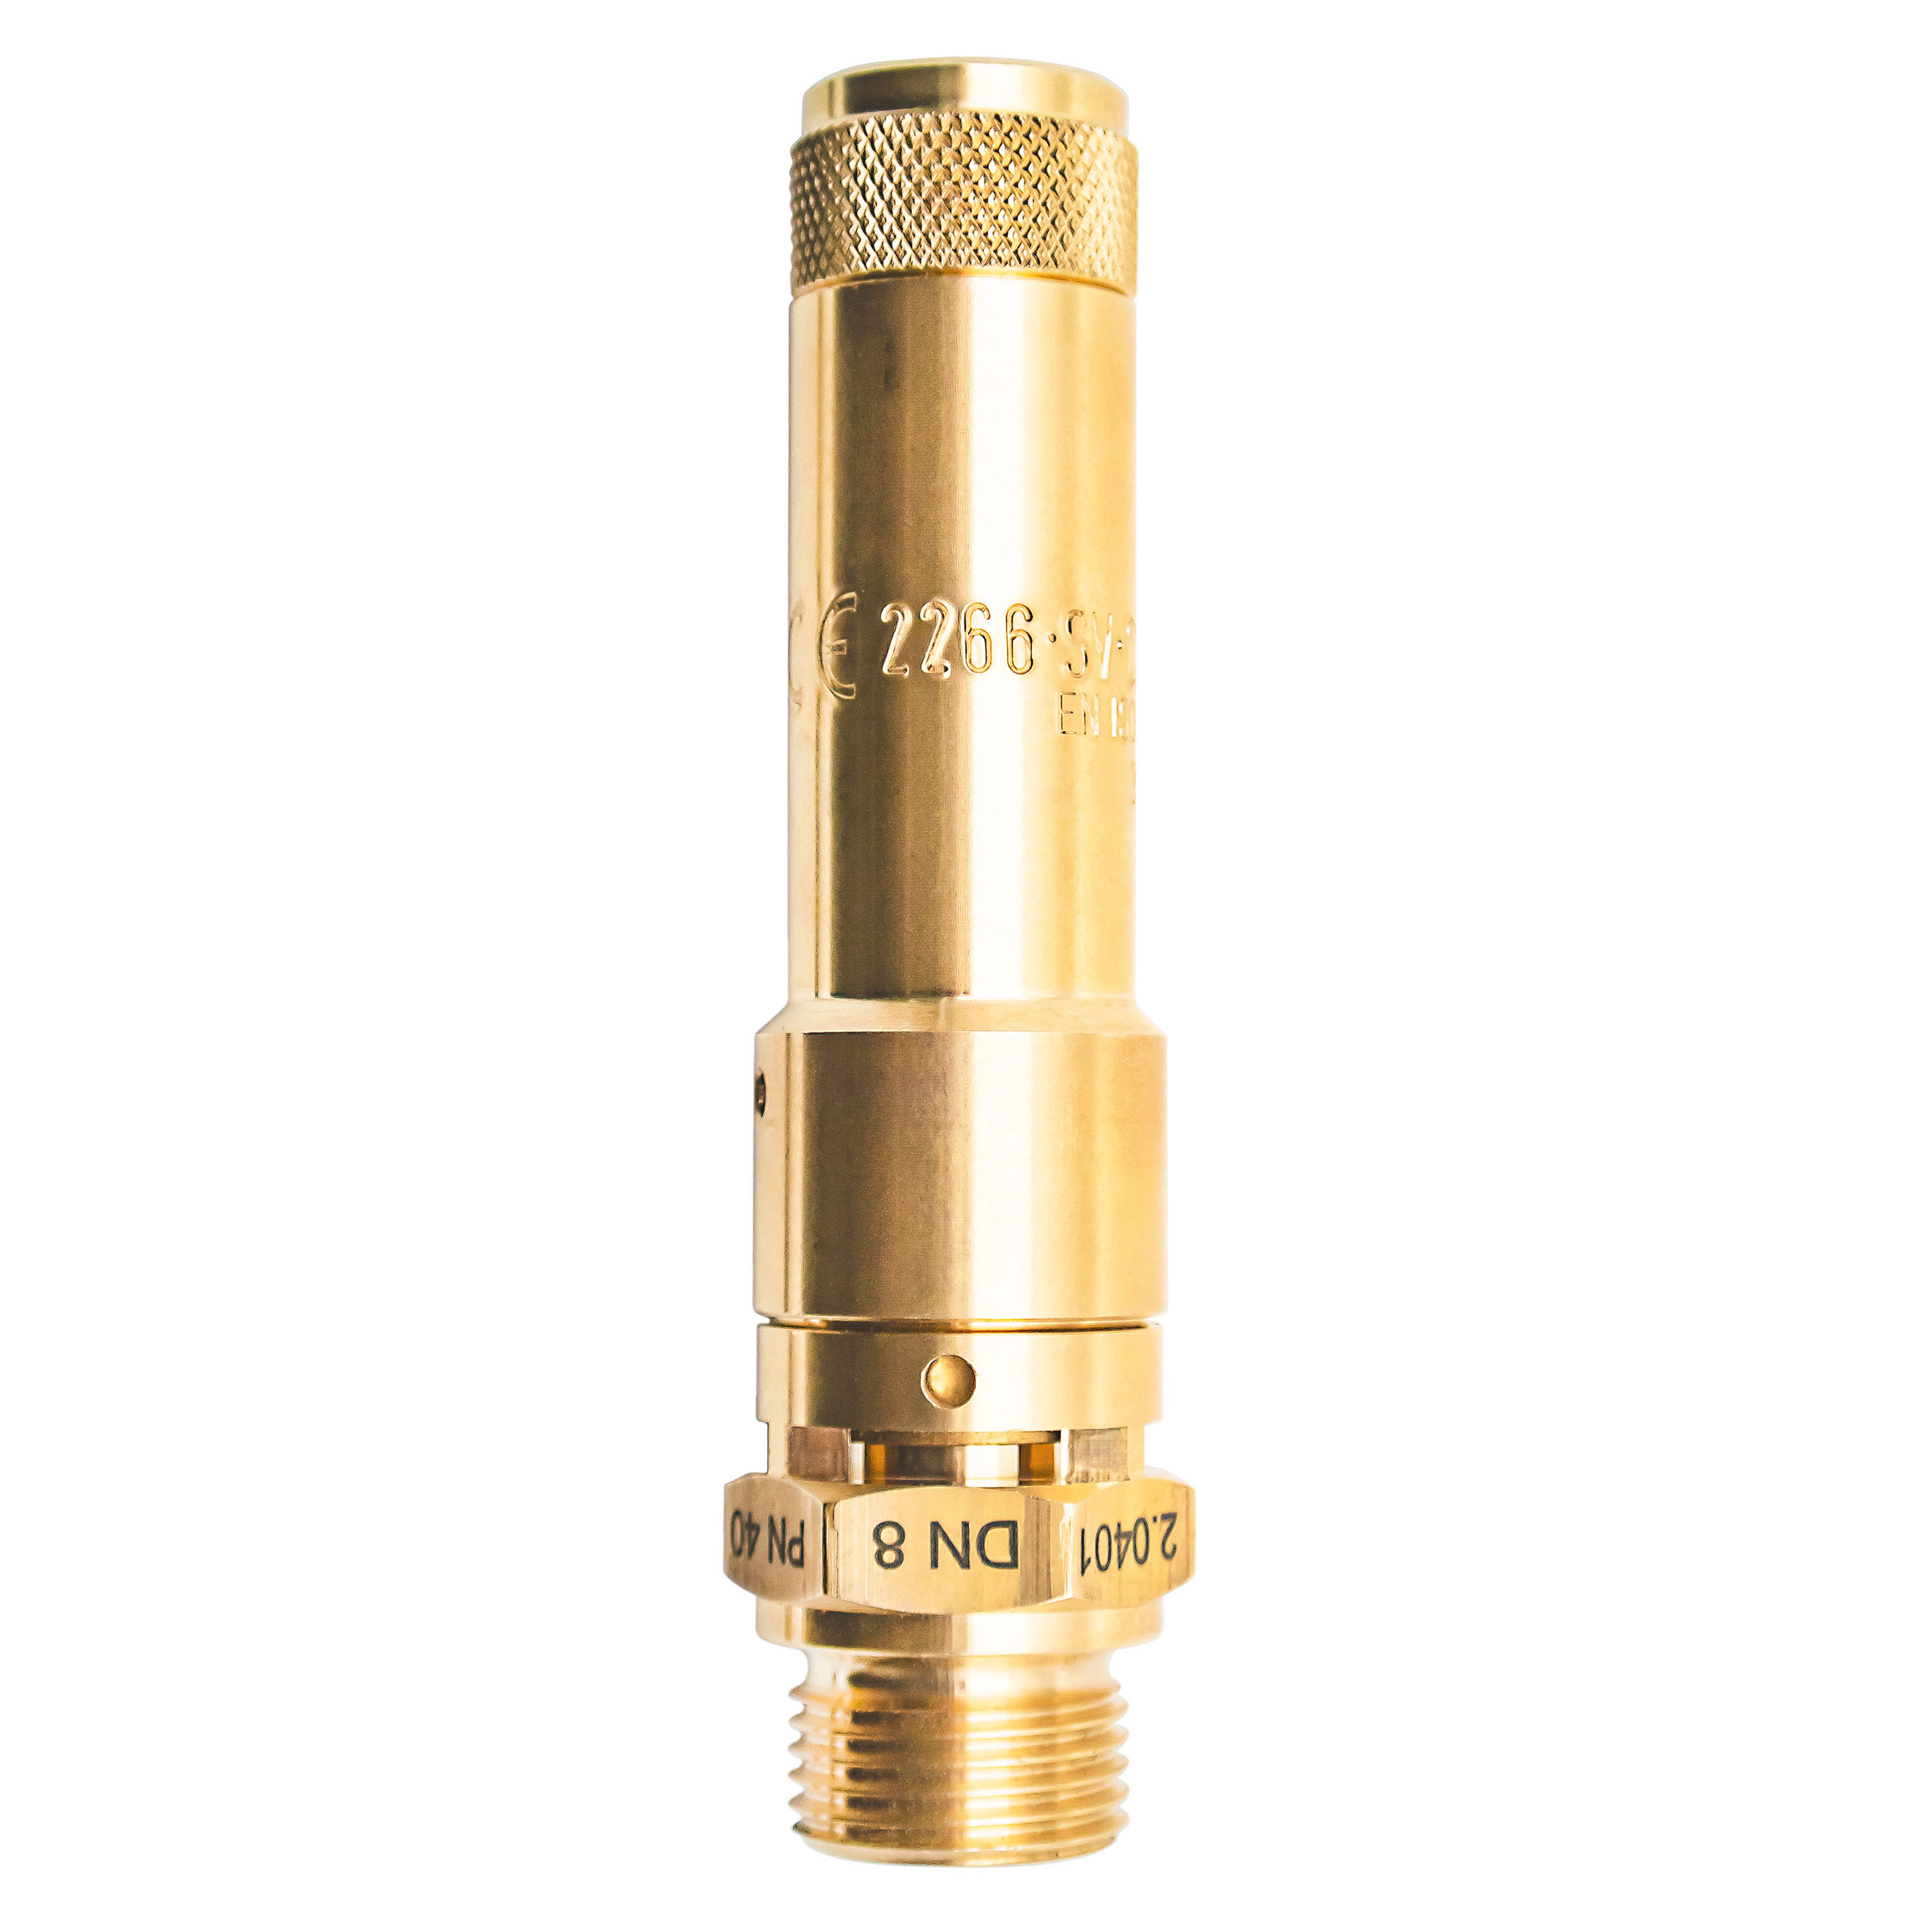 Component-tested safety valve DN 8, G½, pressure: 5.1-7 bar